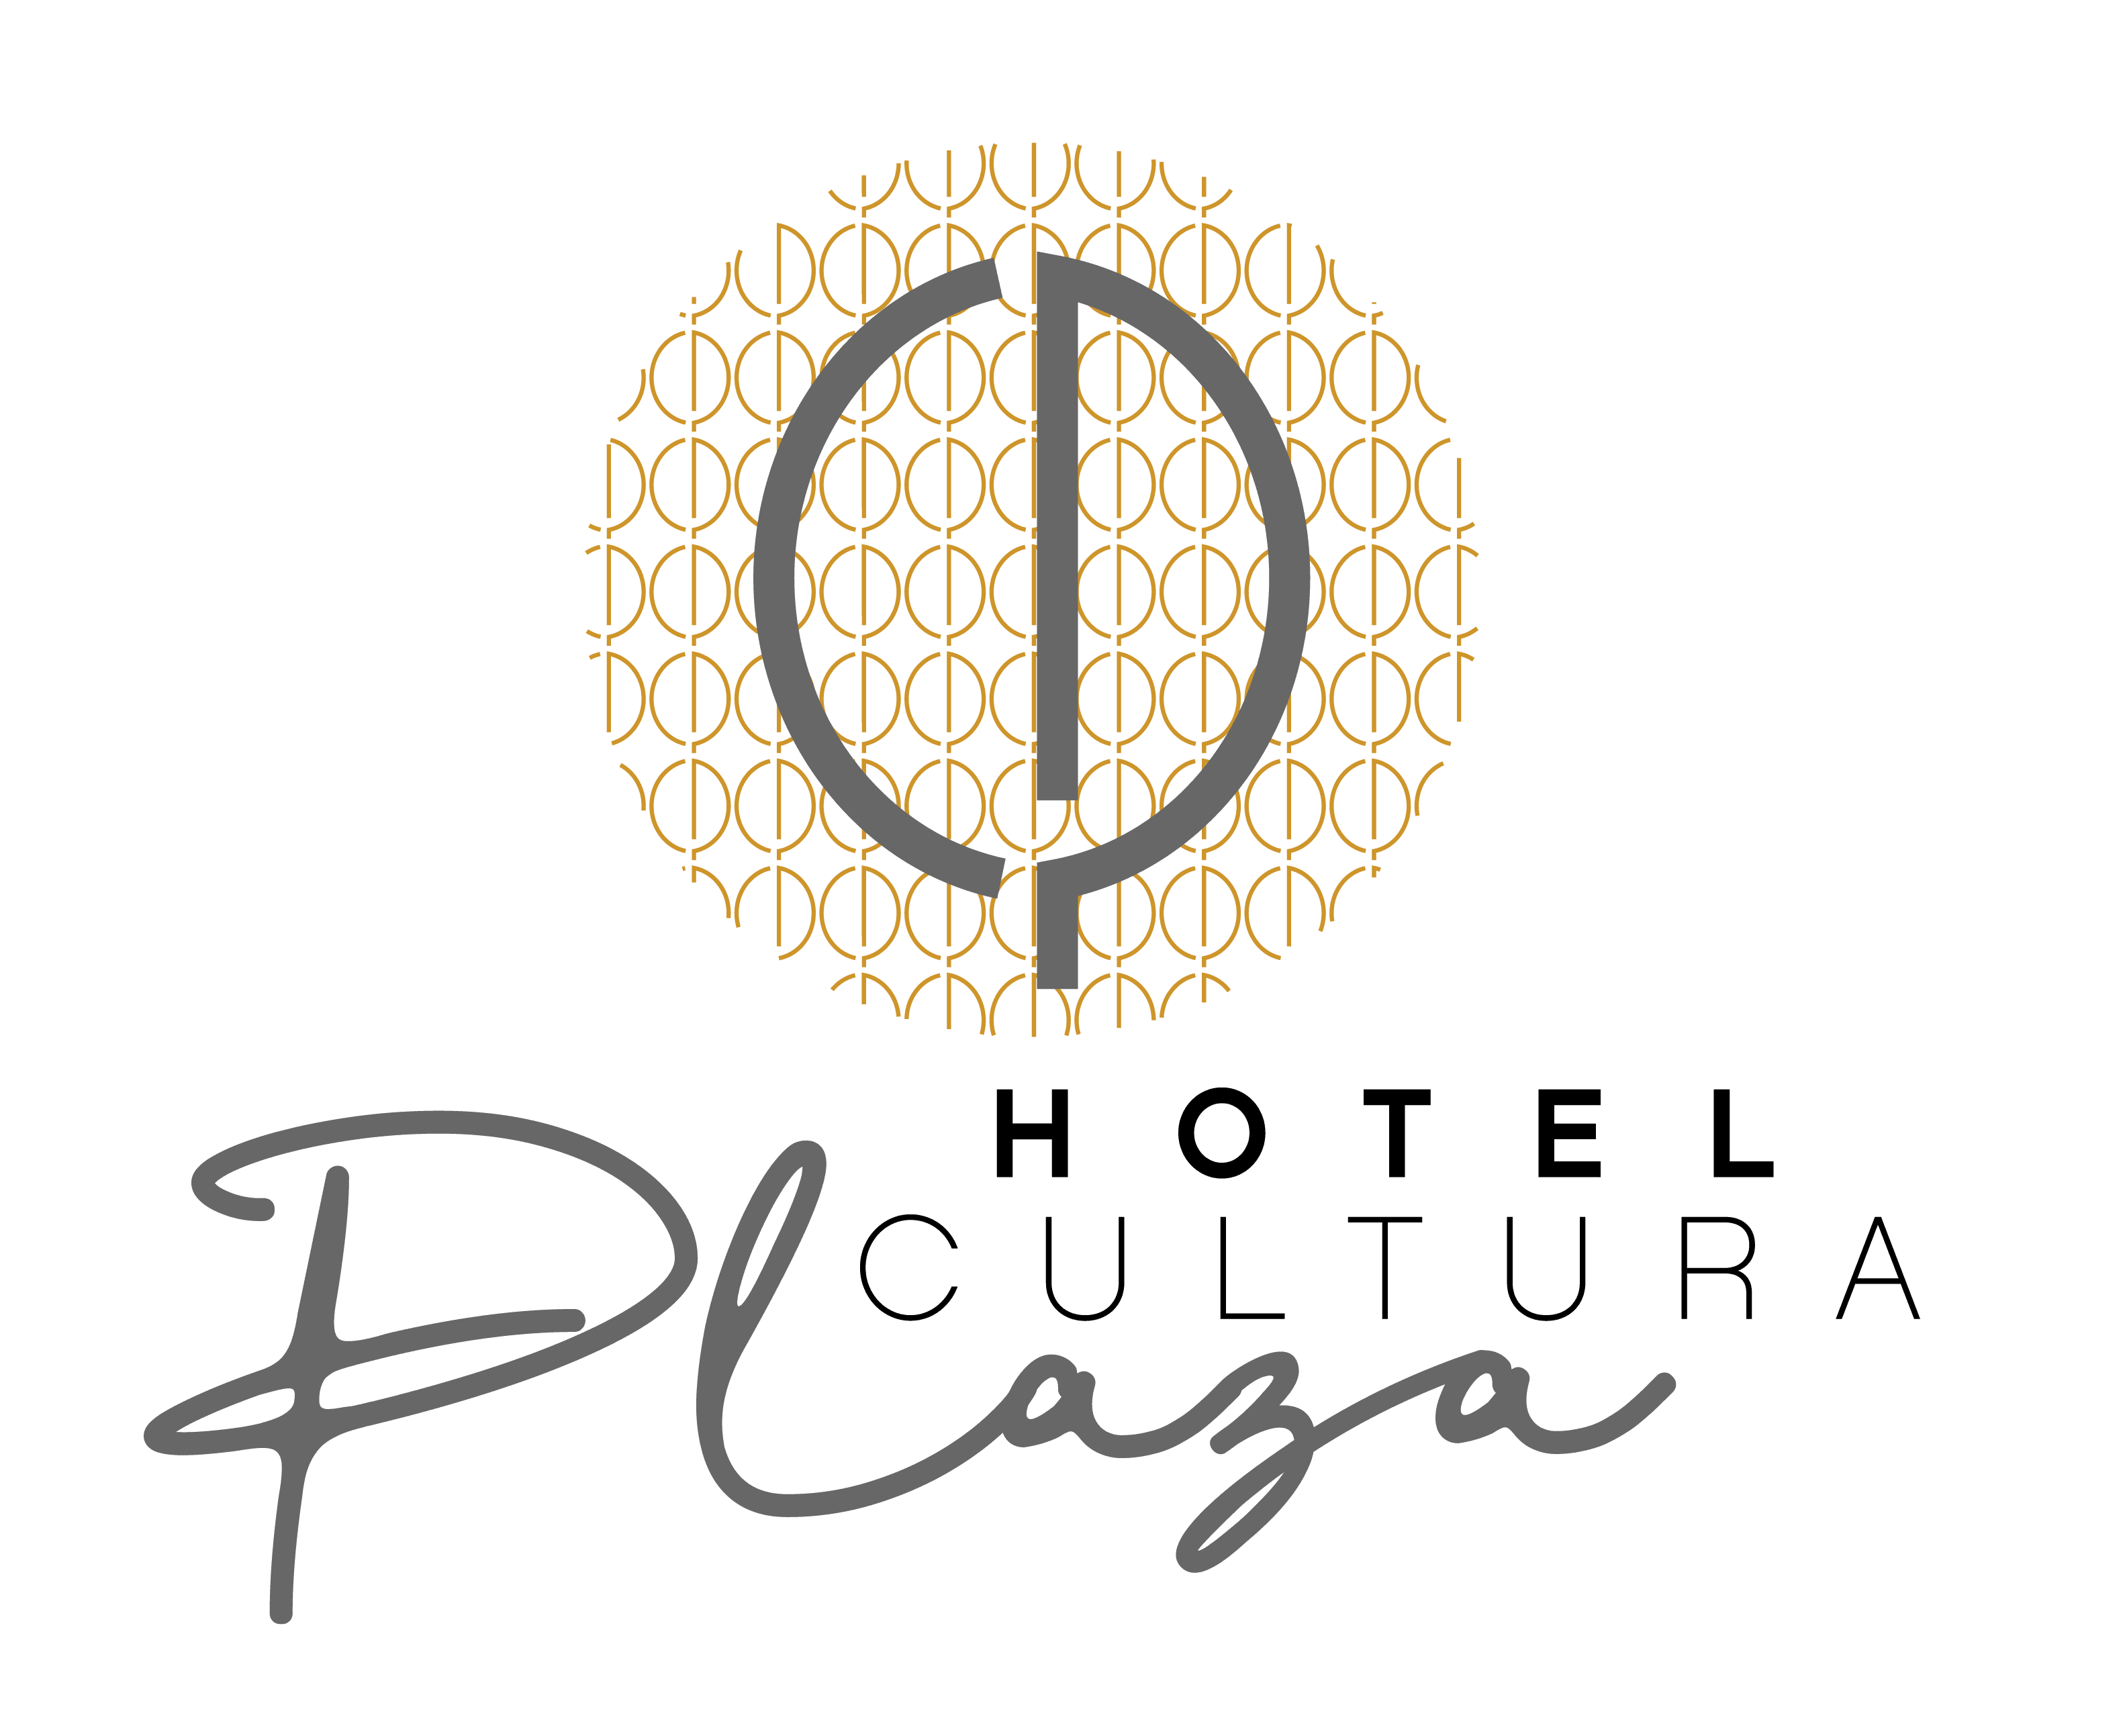 HotelCulturaPlaza